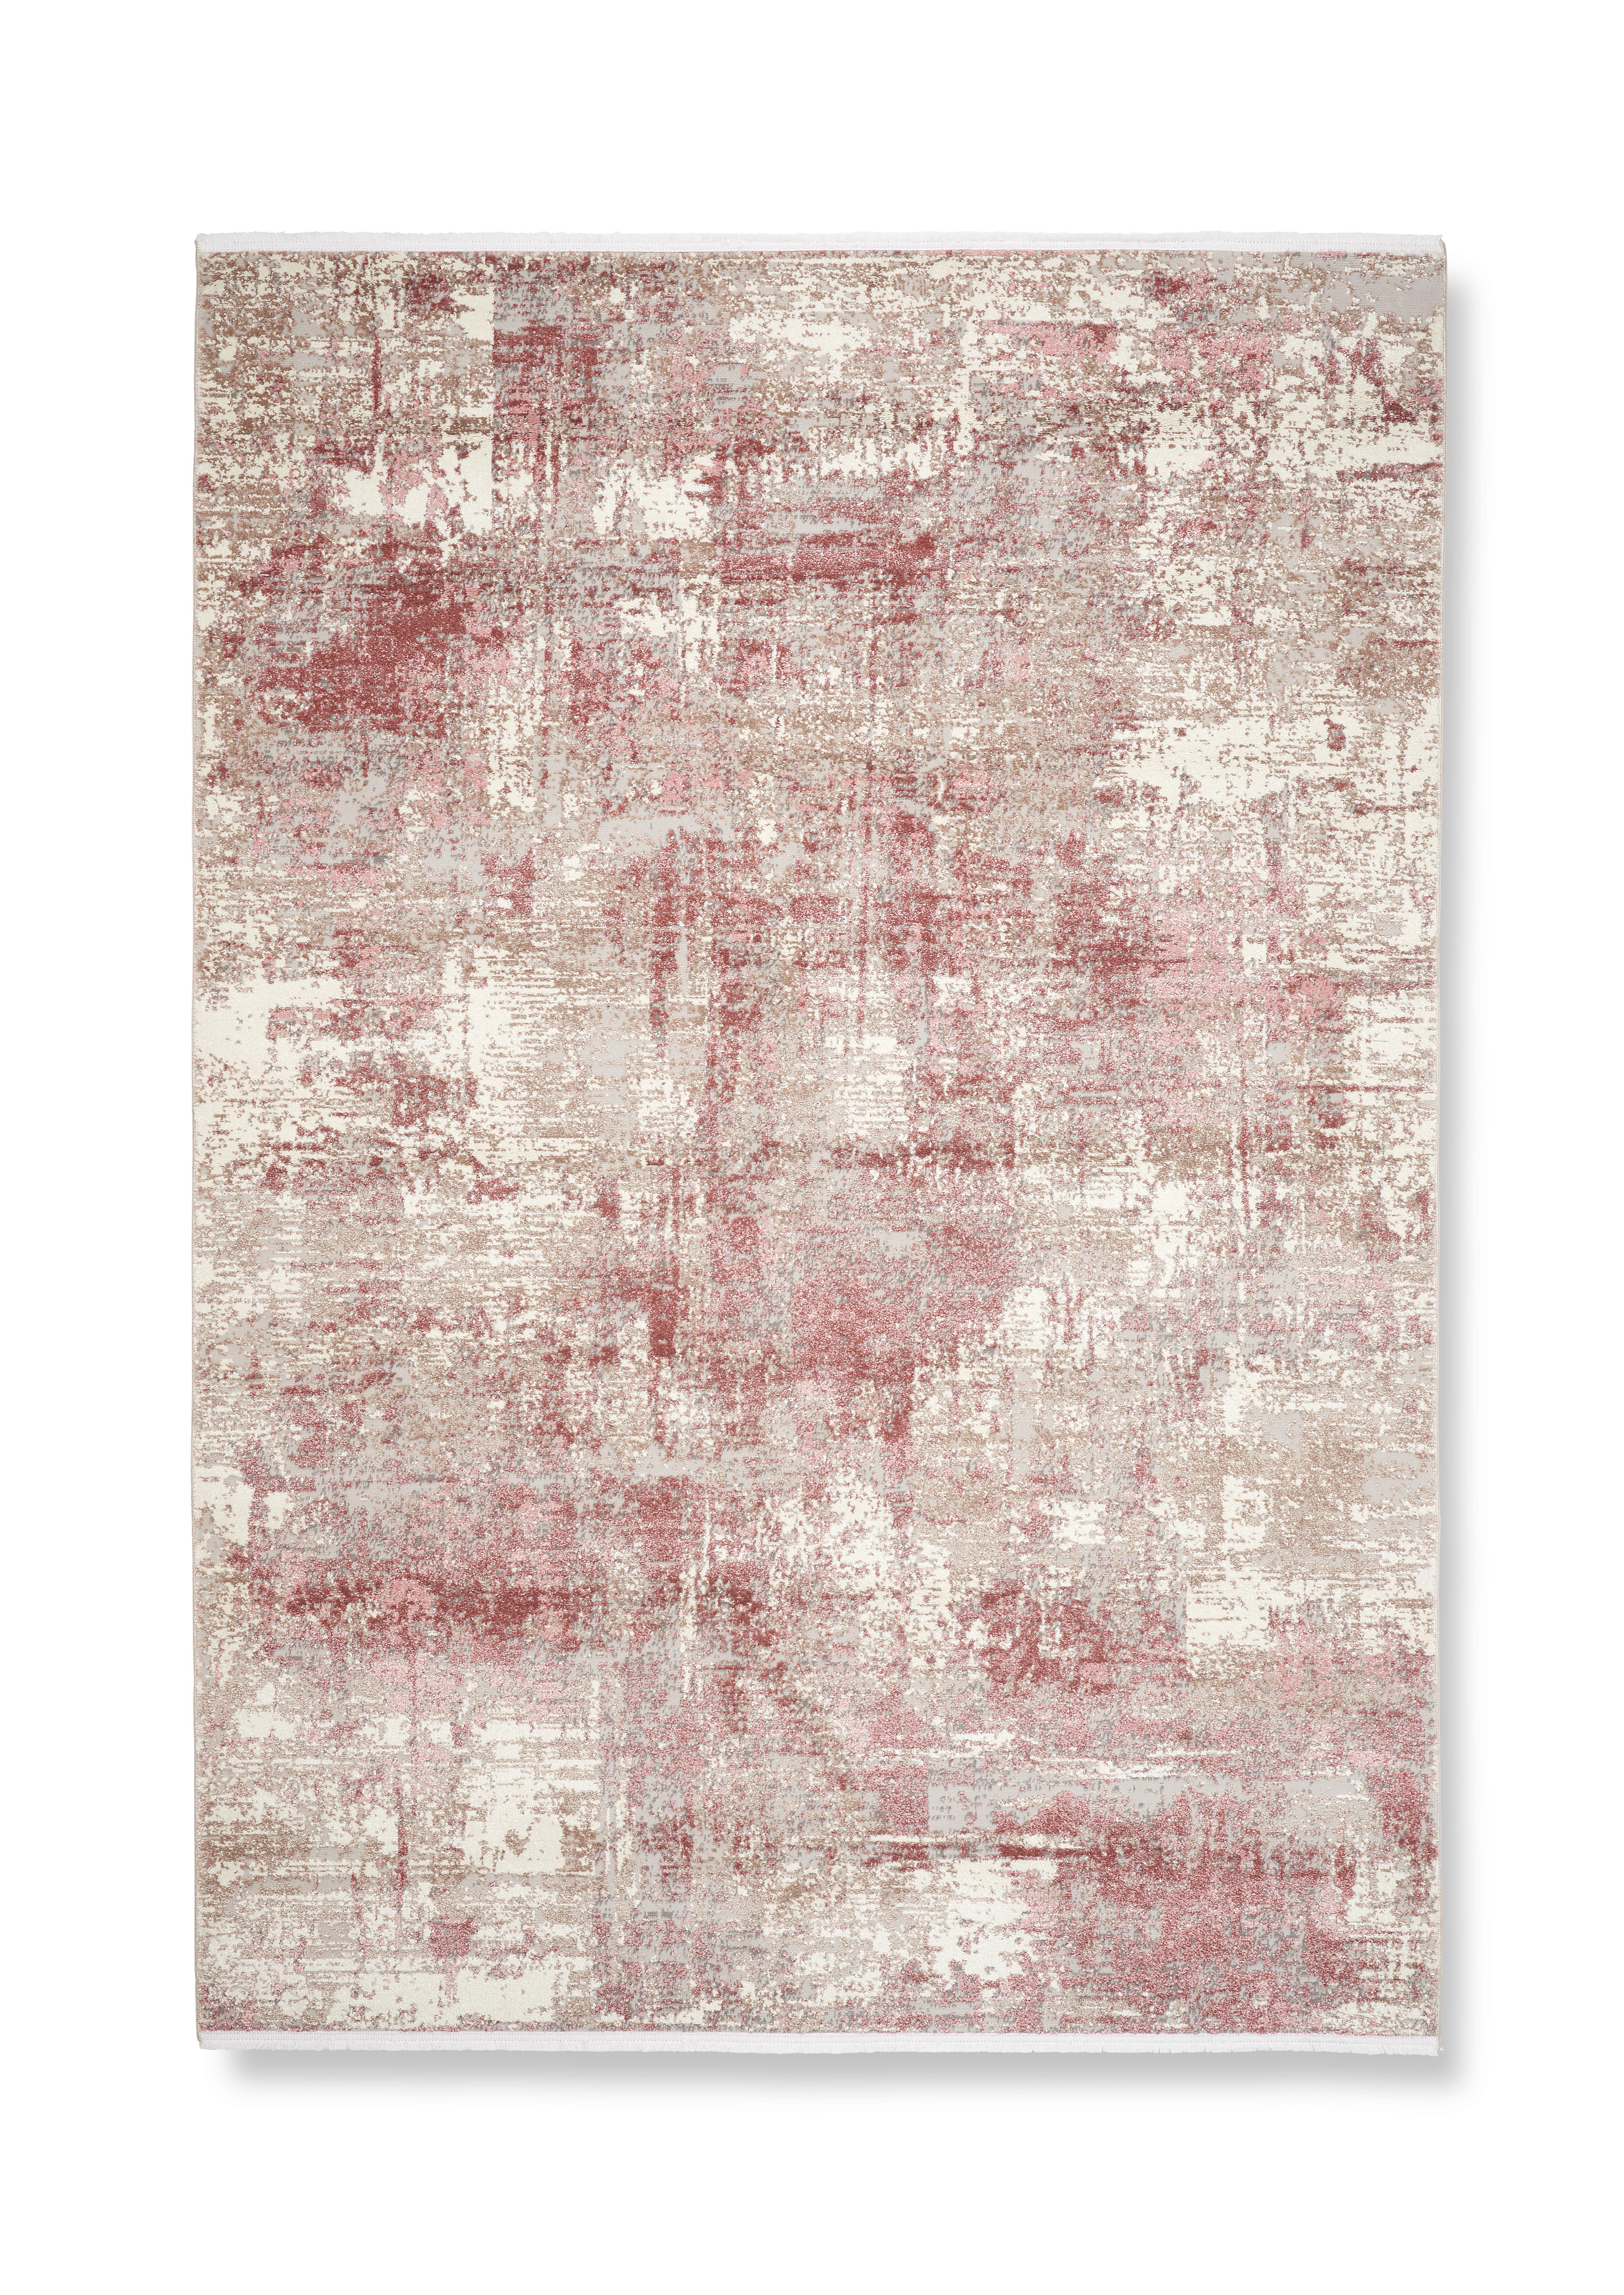 Tkani Tepih Malik 1 - pink/krem, Modern, tekstil (80/150cm) - Modern Living